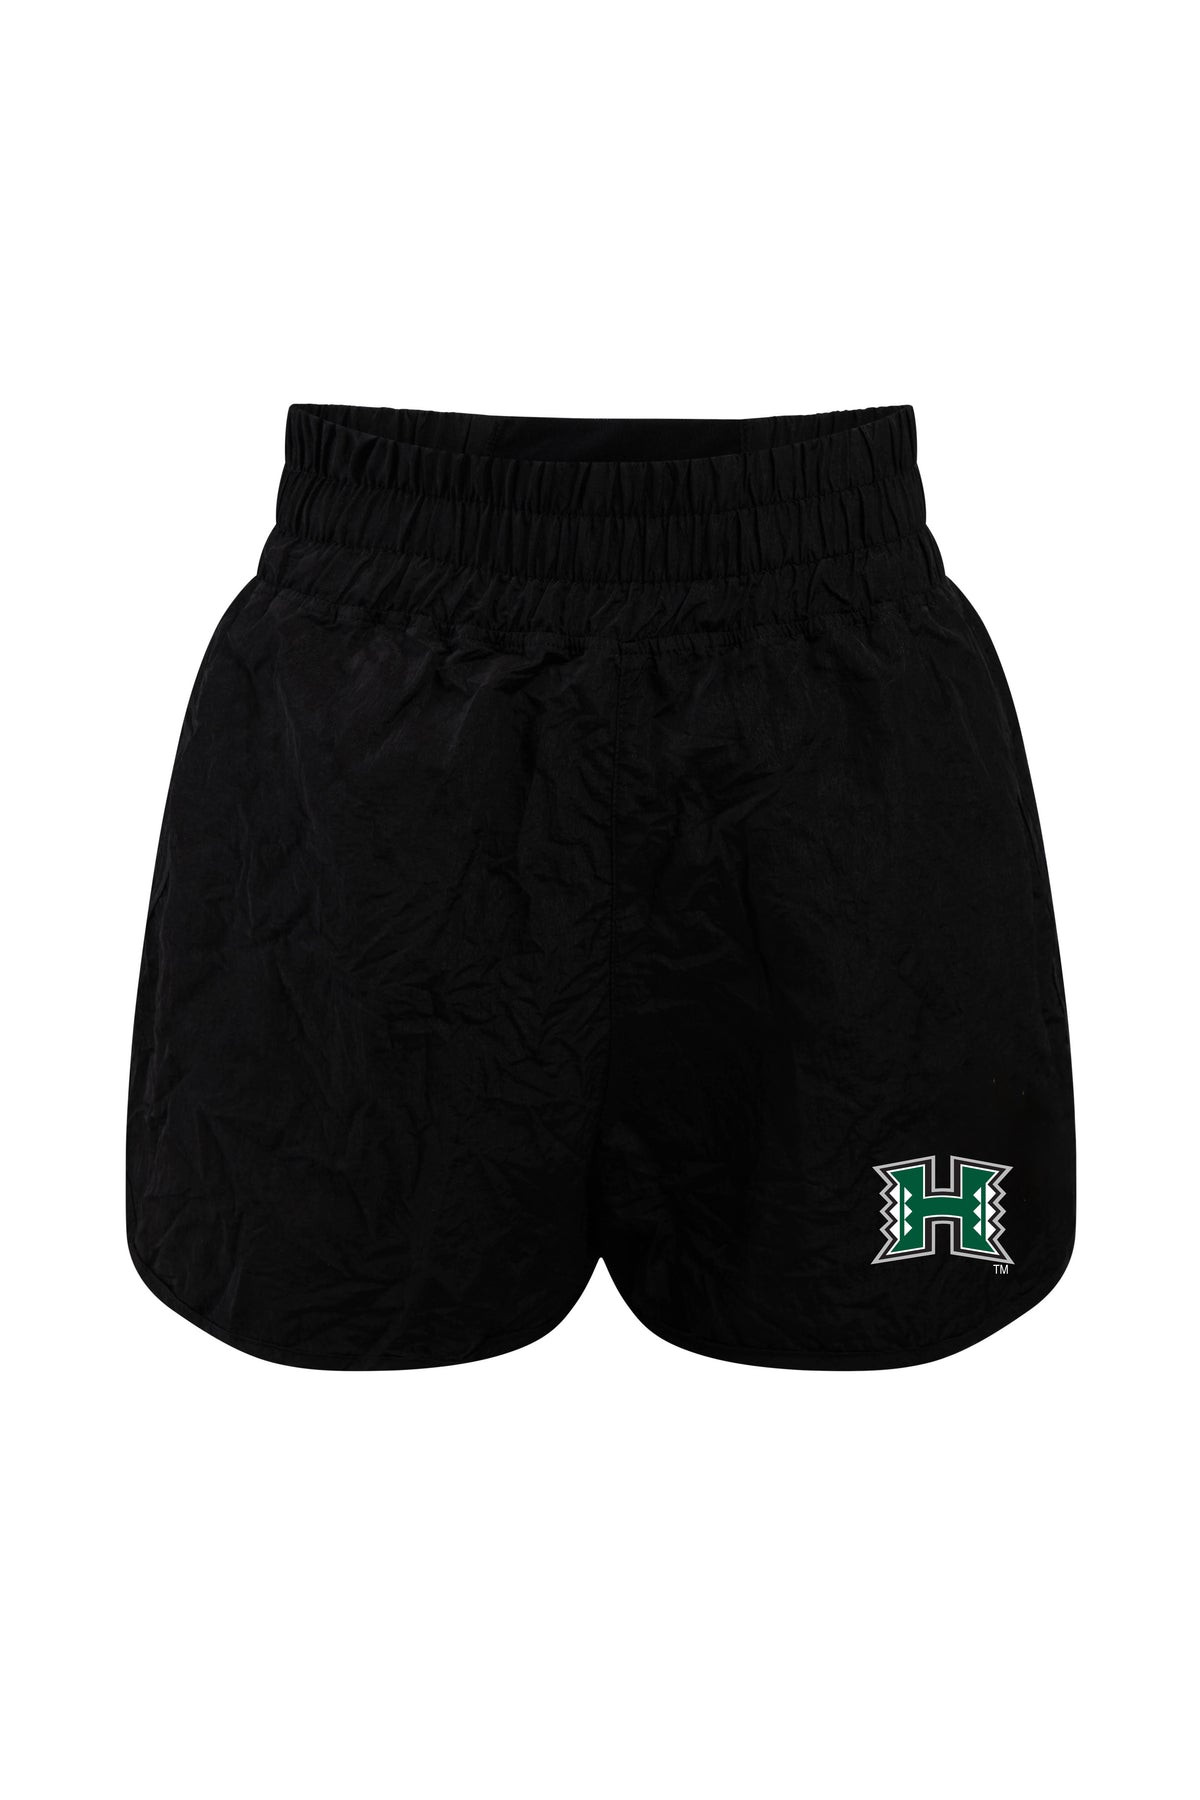 University of Hawaii Boxer Short